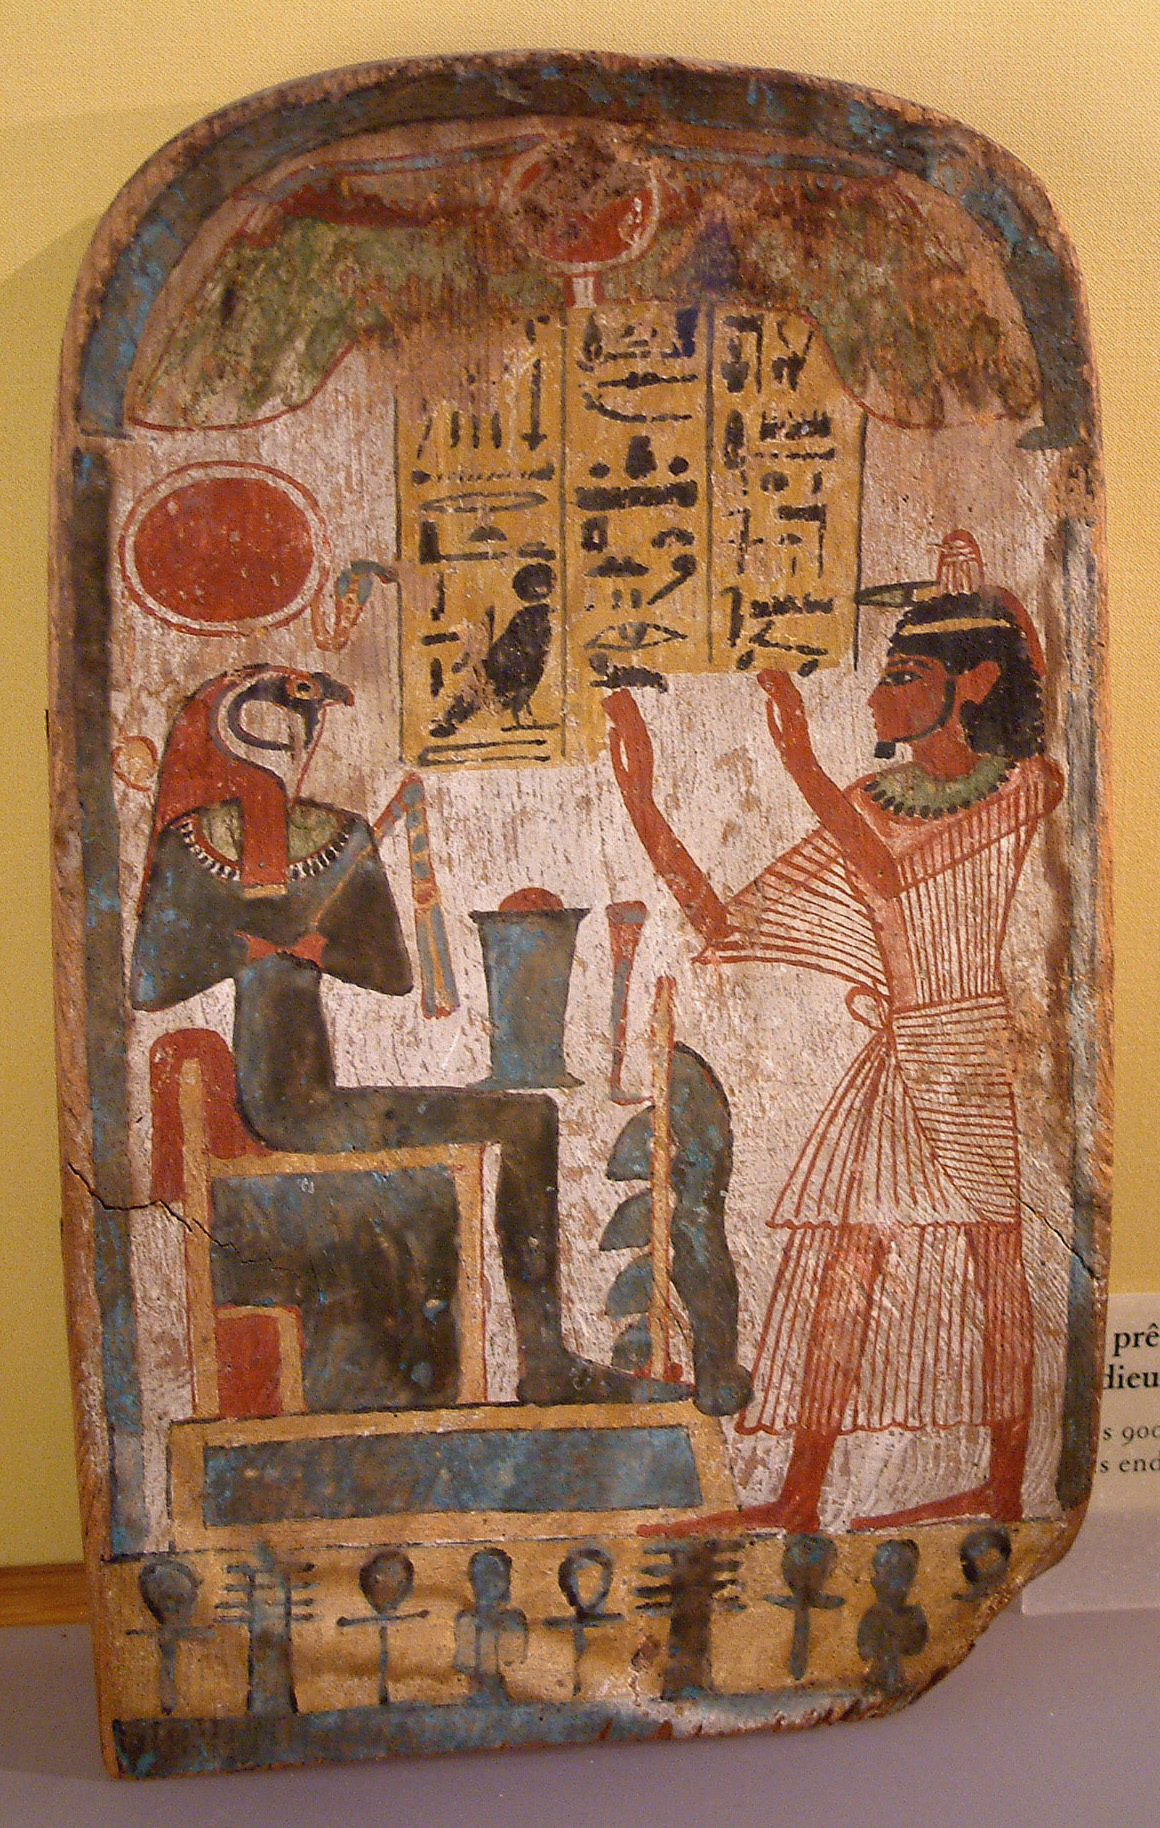 Egypt Mummy Hd Wallpapers